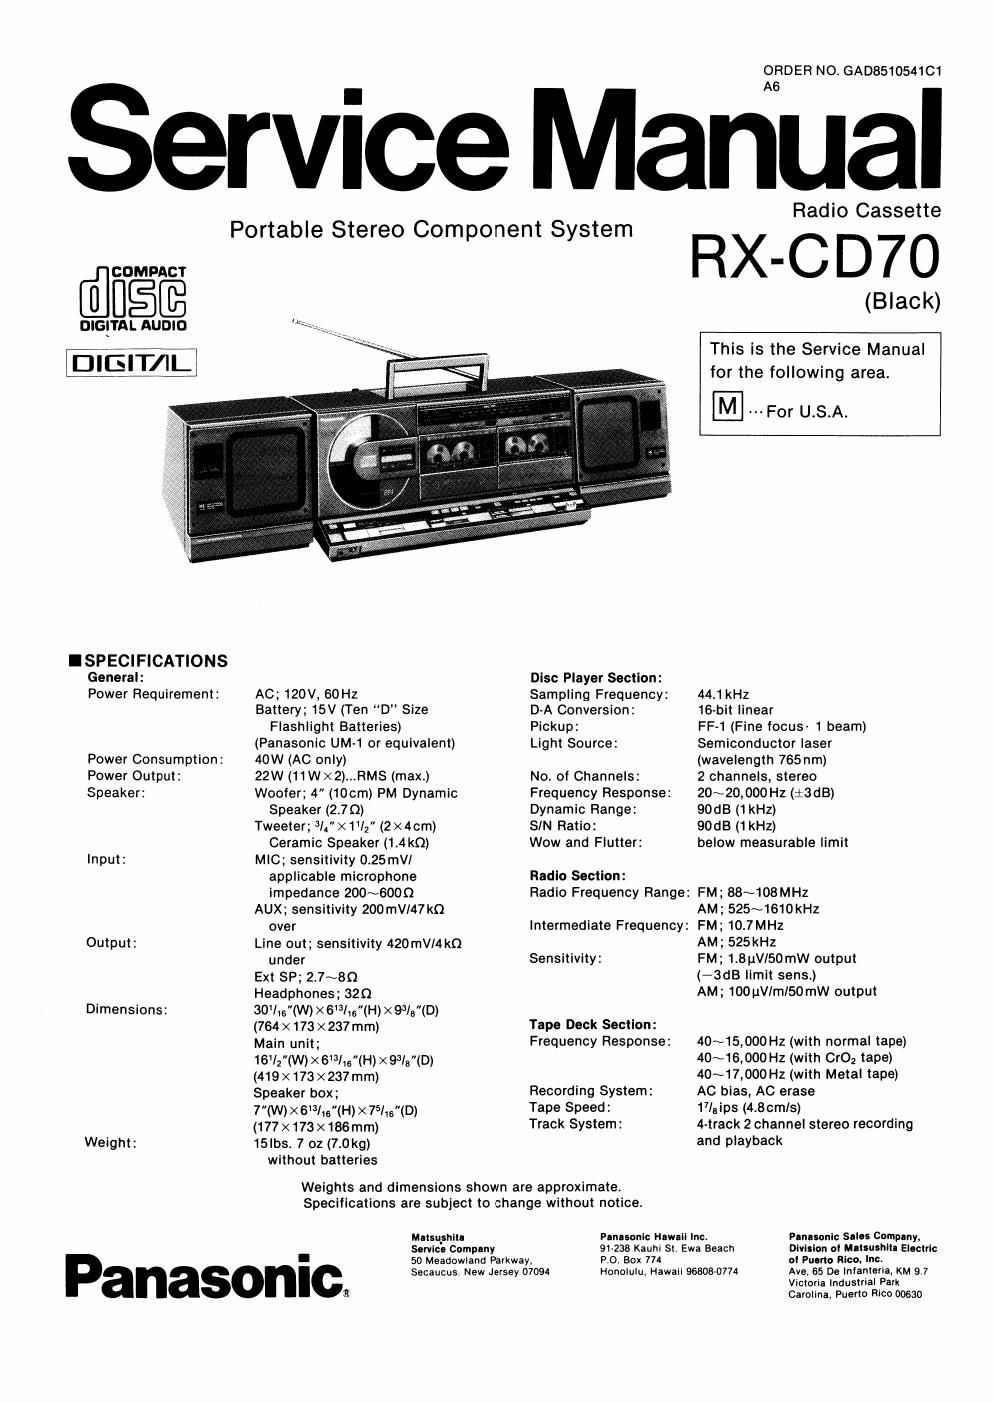 panasonic rx cd 70 service manual